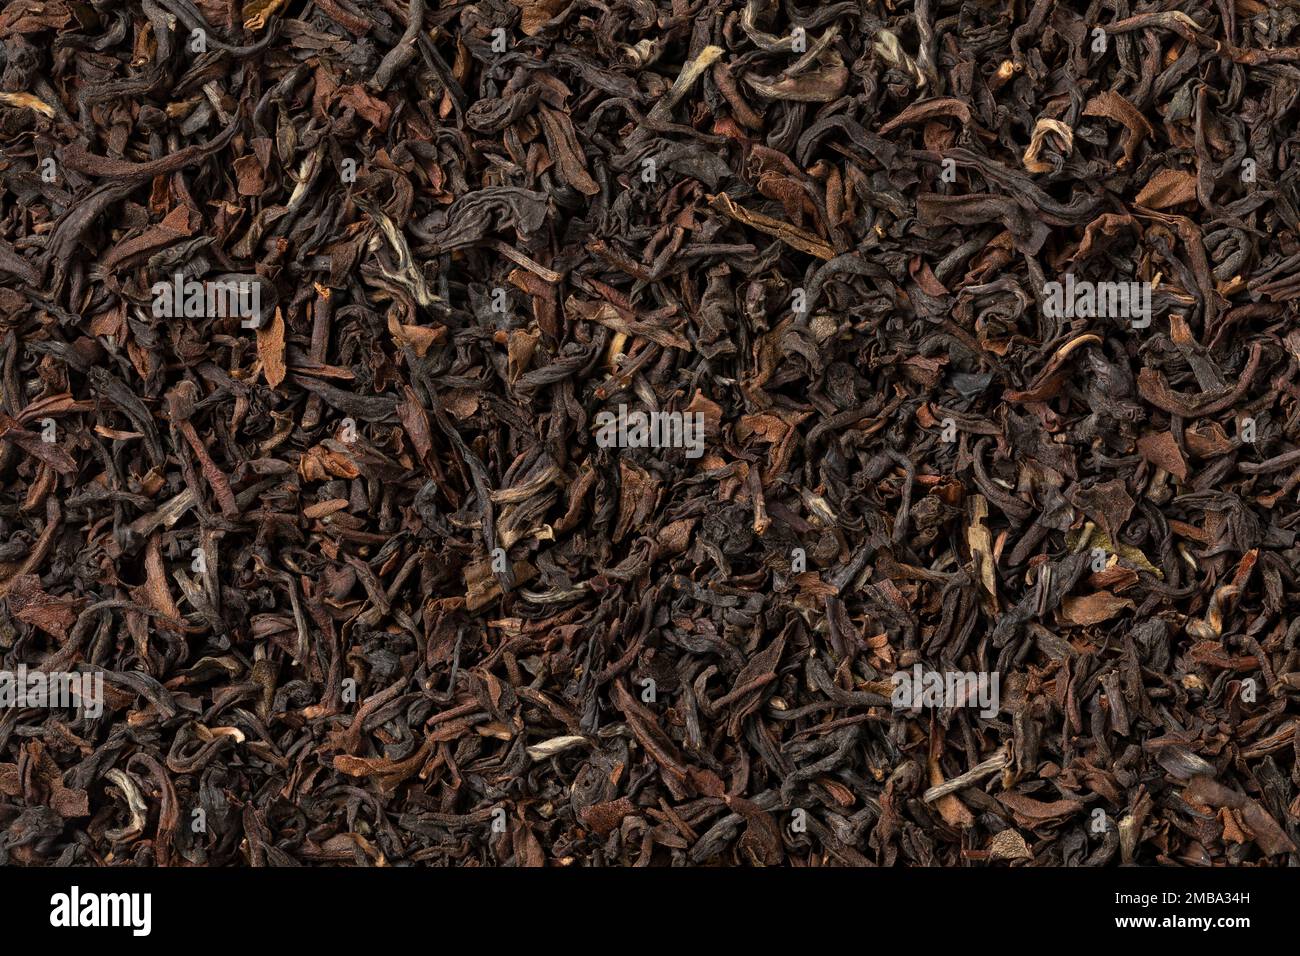 Indian Tukvar darjeeling dried tea leaves close up full frame as background Stock Photo